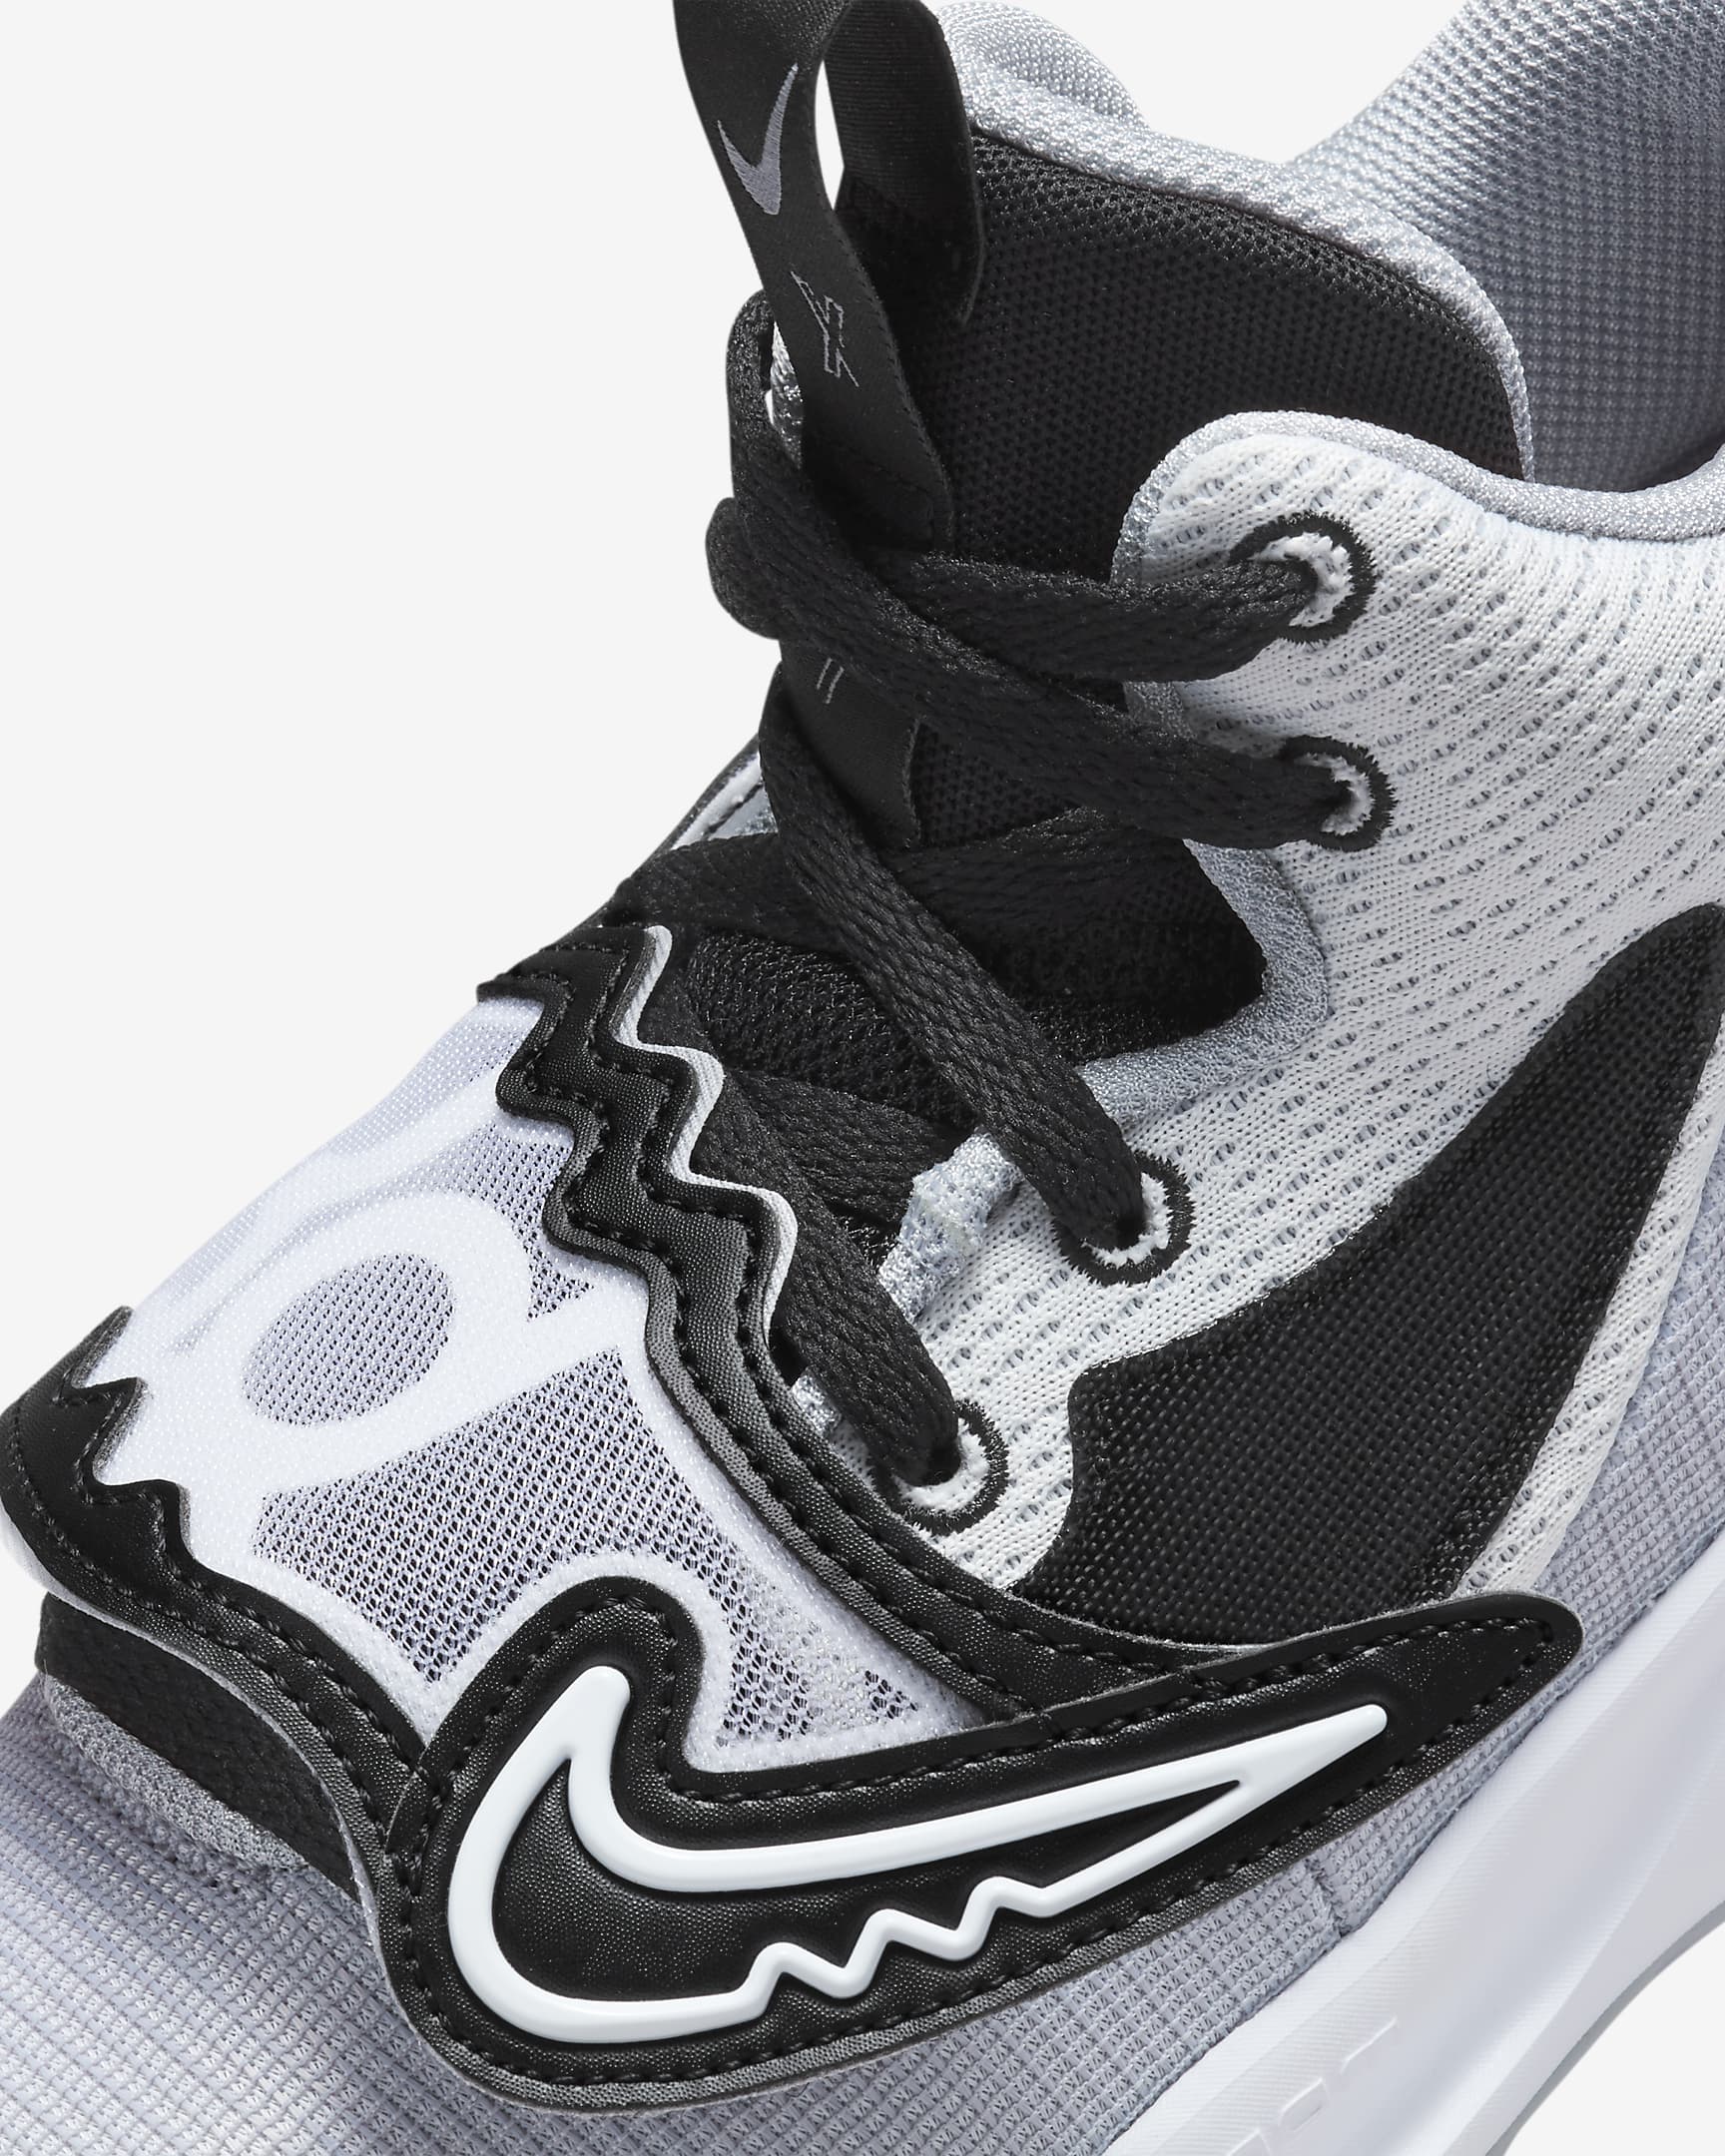 KD Trey 5 X Basketball Shoes. Nike RO